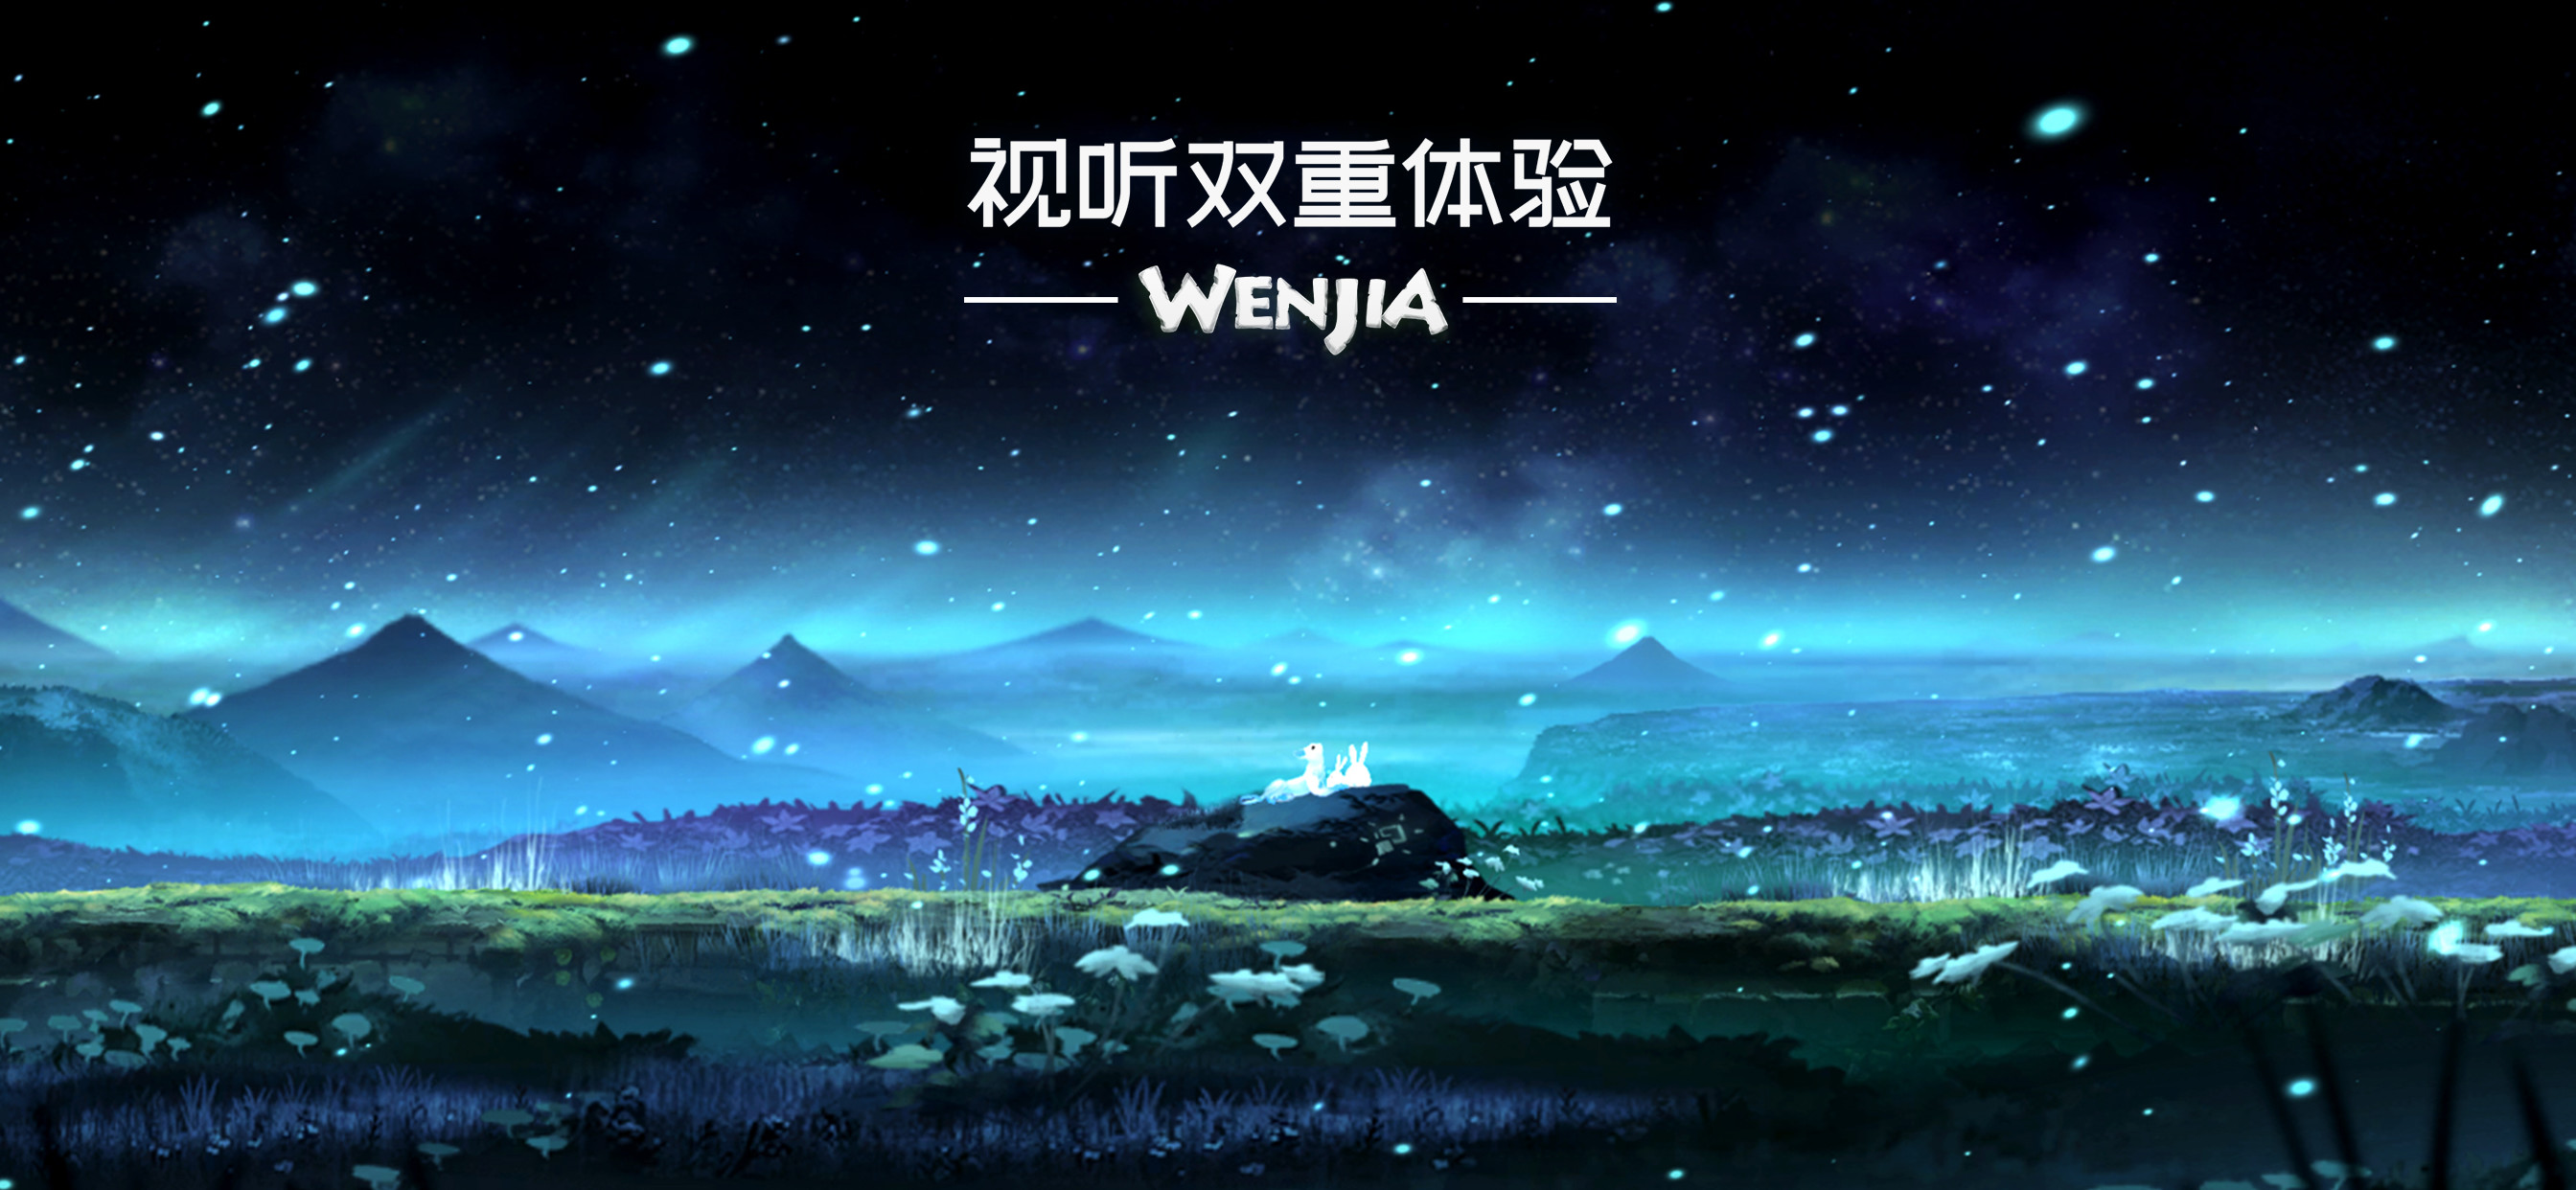 Wenjia screenshot